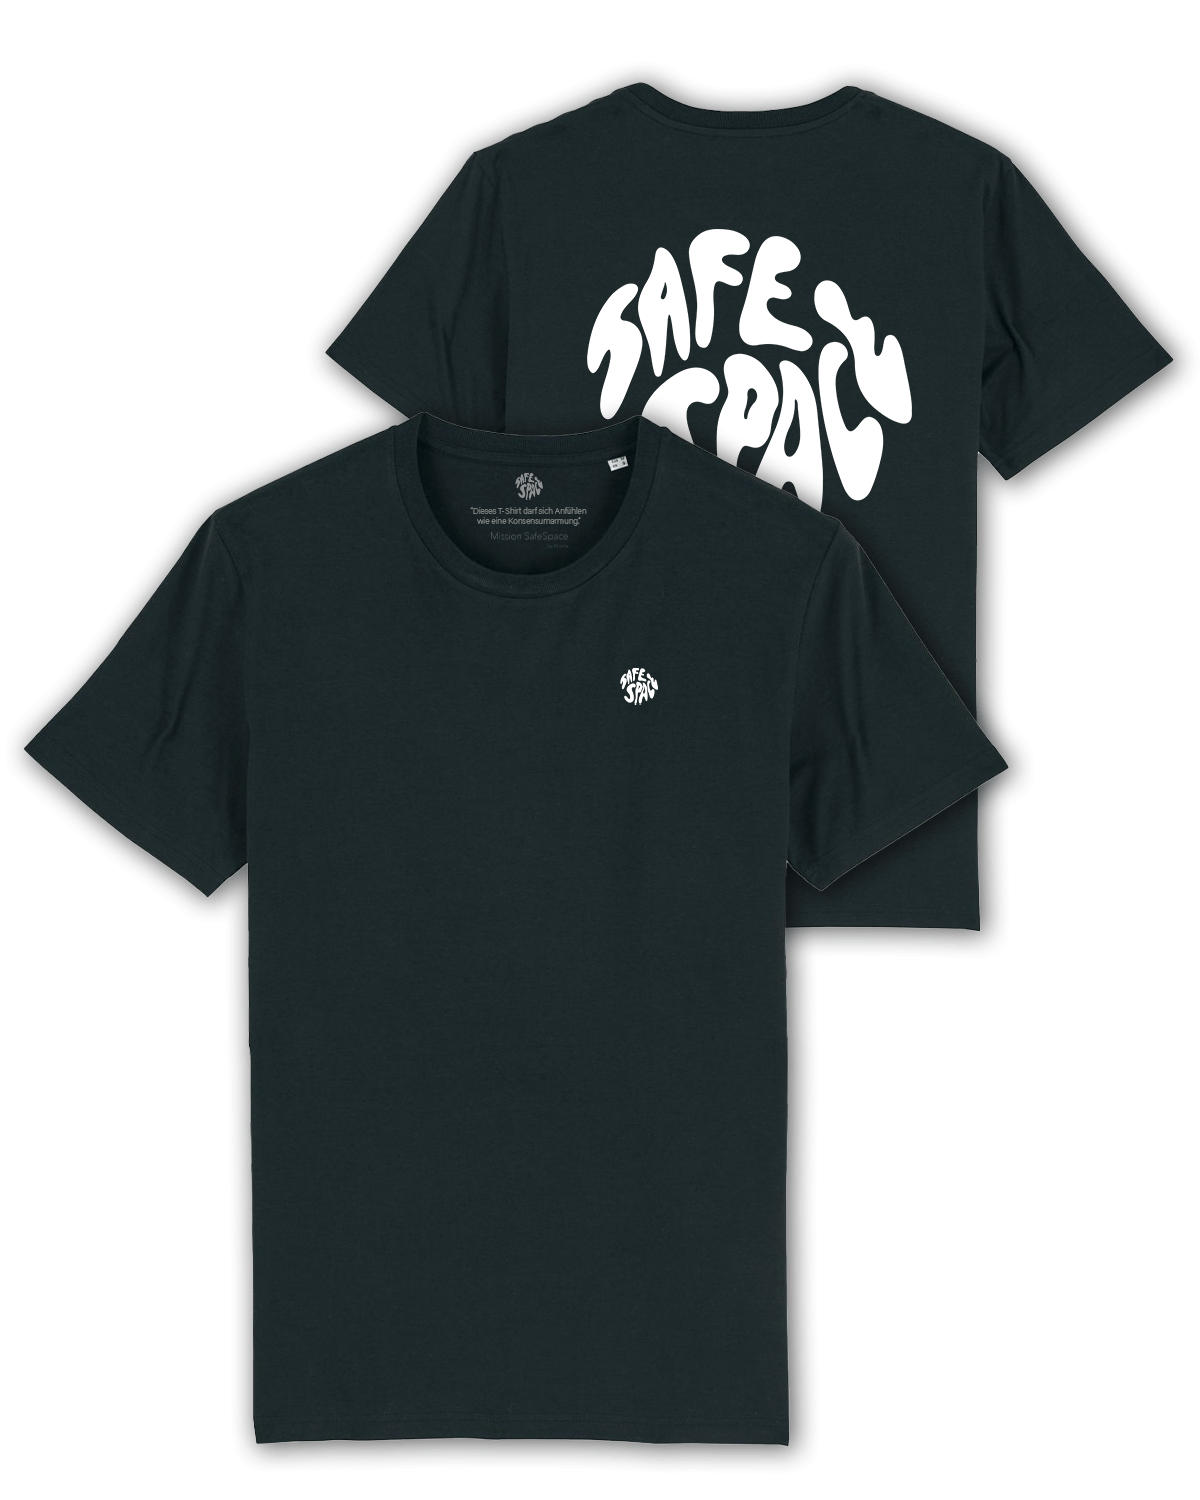 T-Shirt "Mission SafeSpace" schwarz